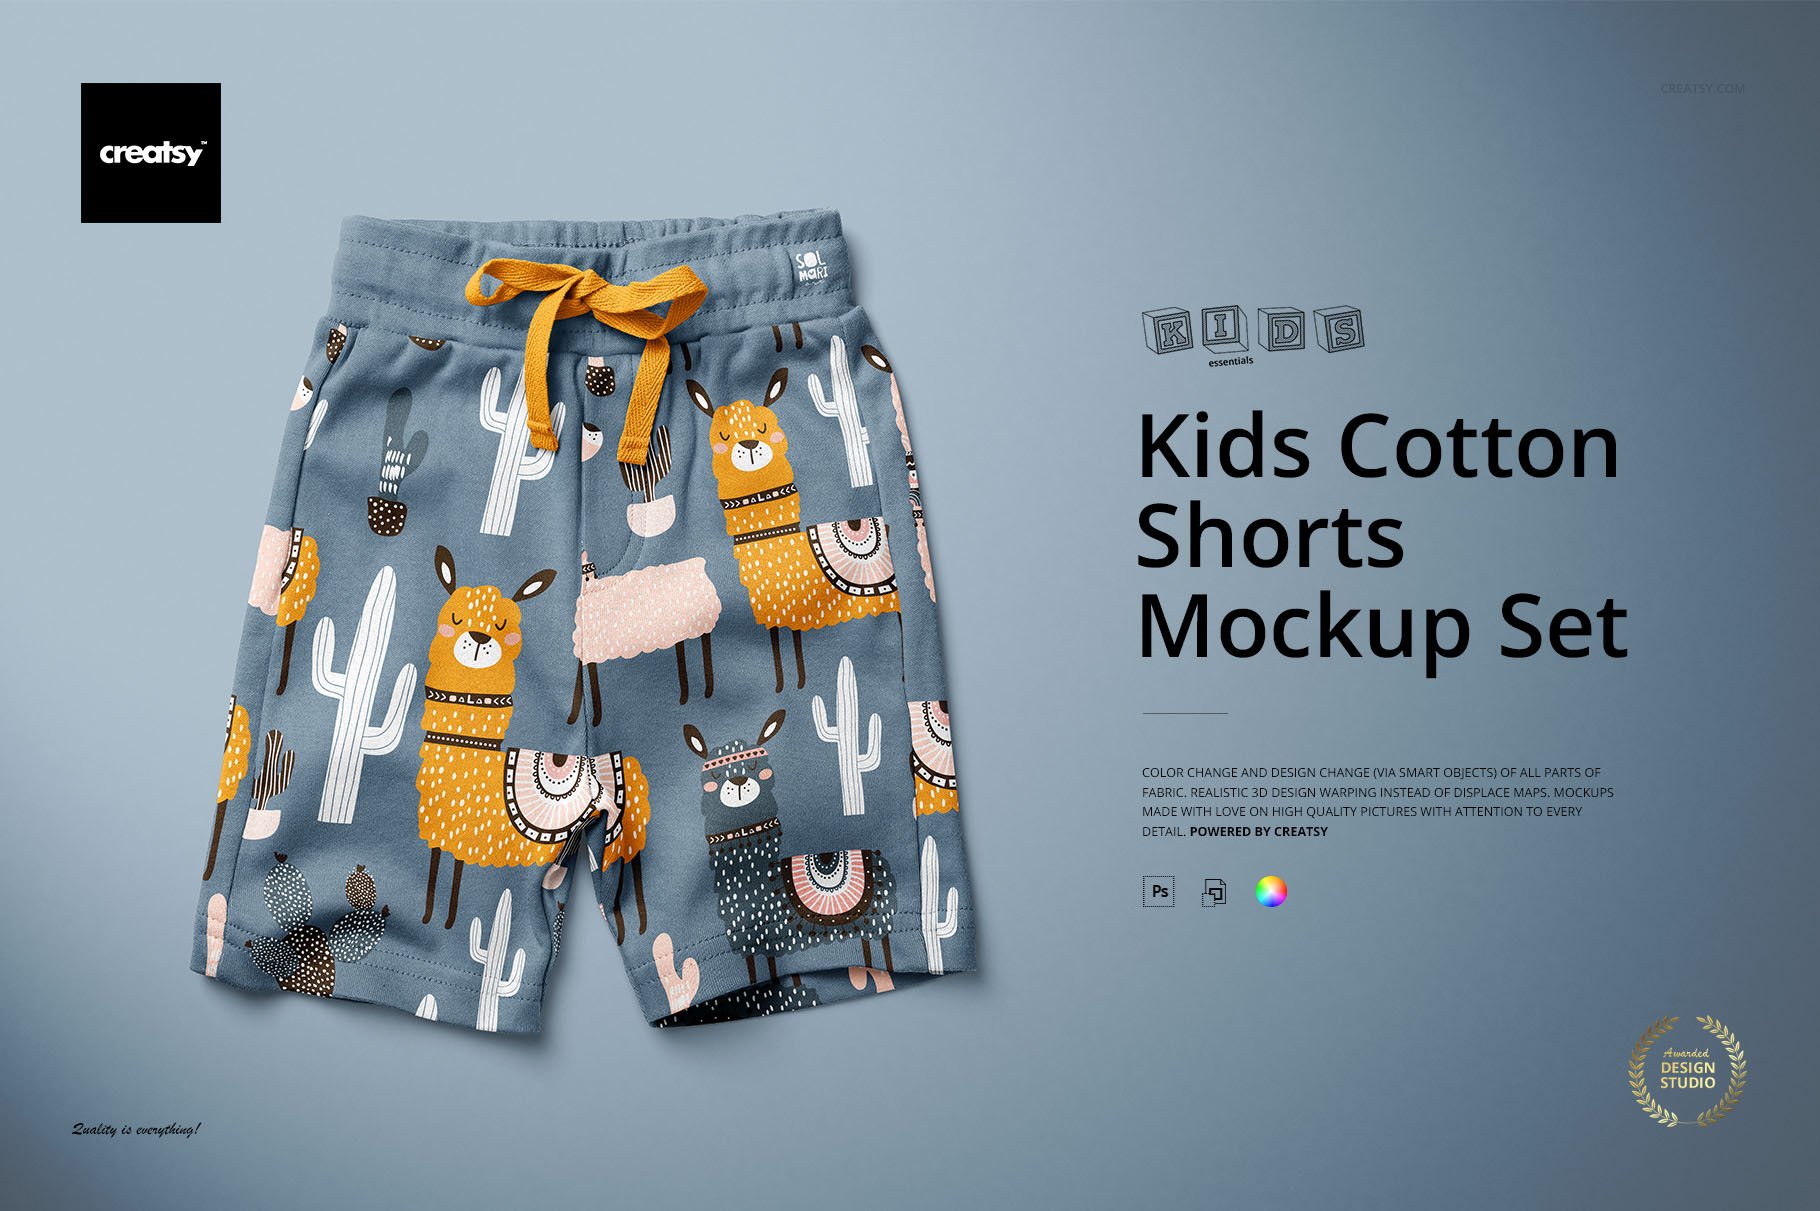 Kids Cotton Shorts Mockup Set cover image.